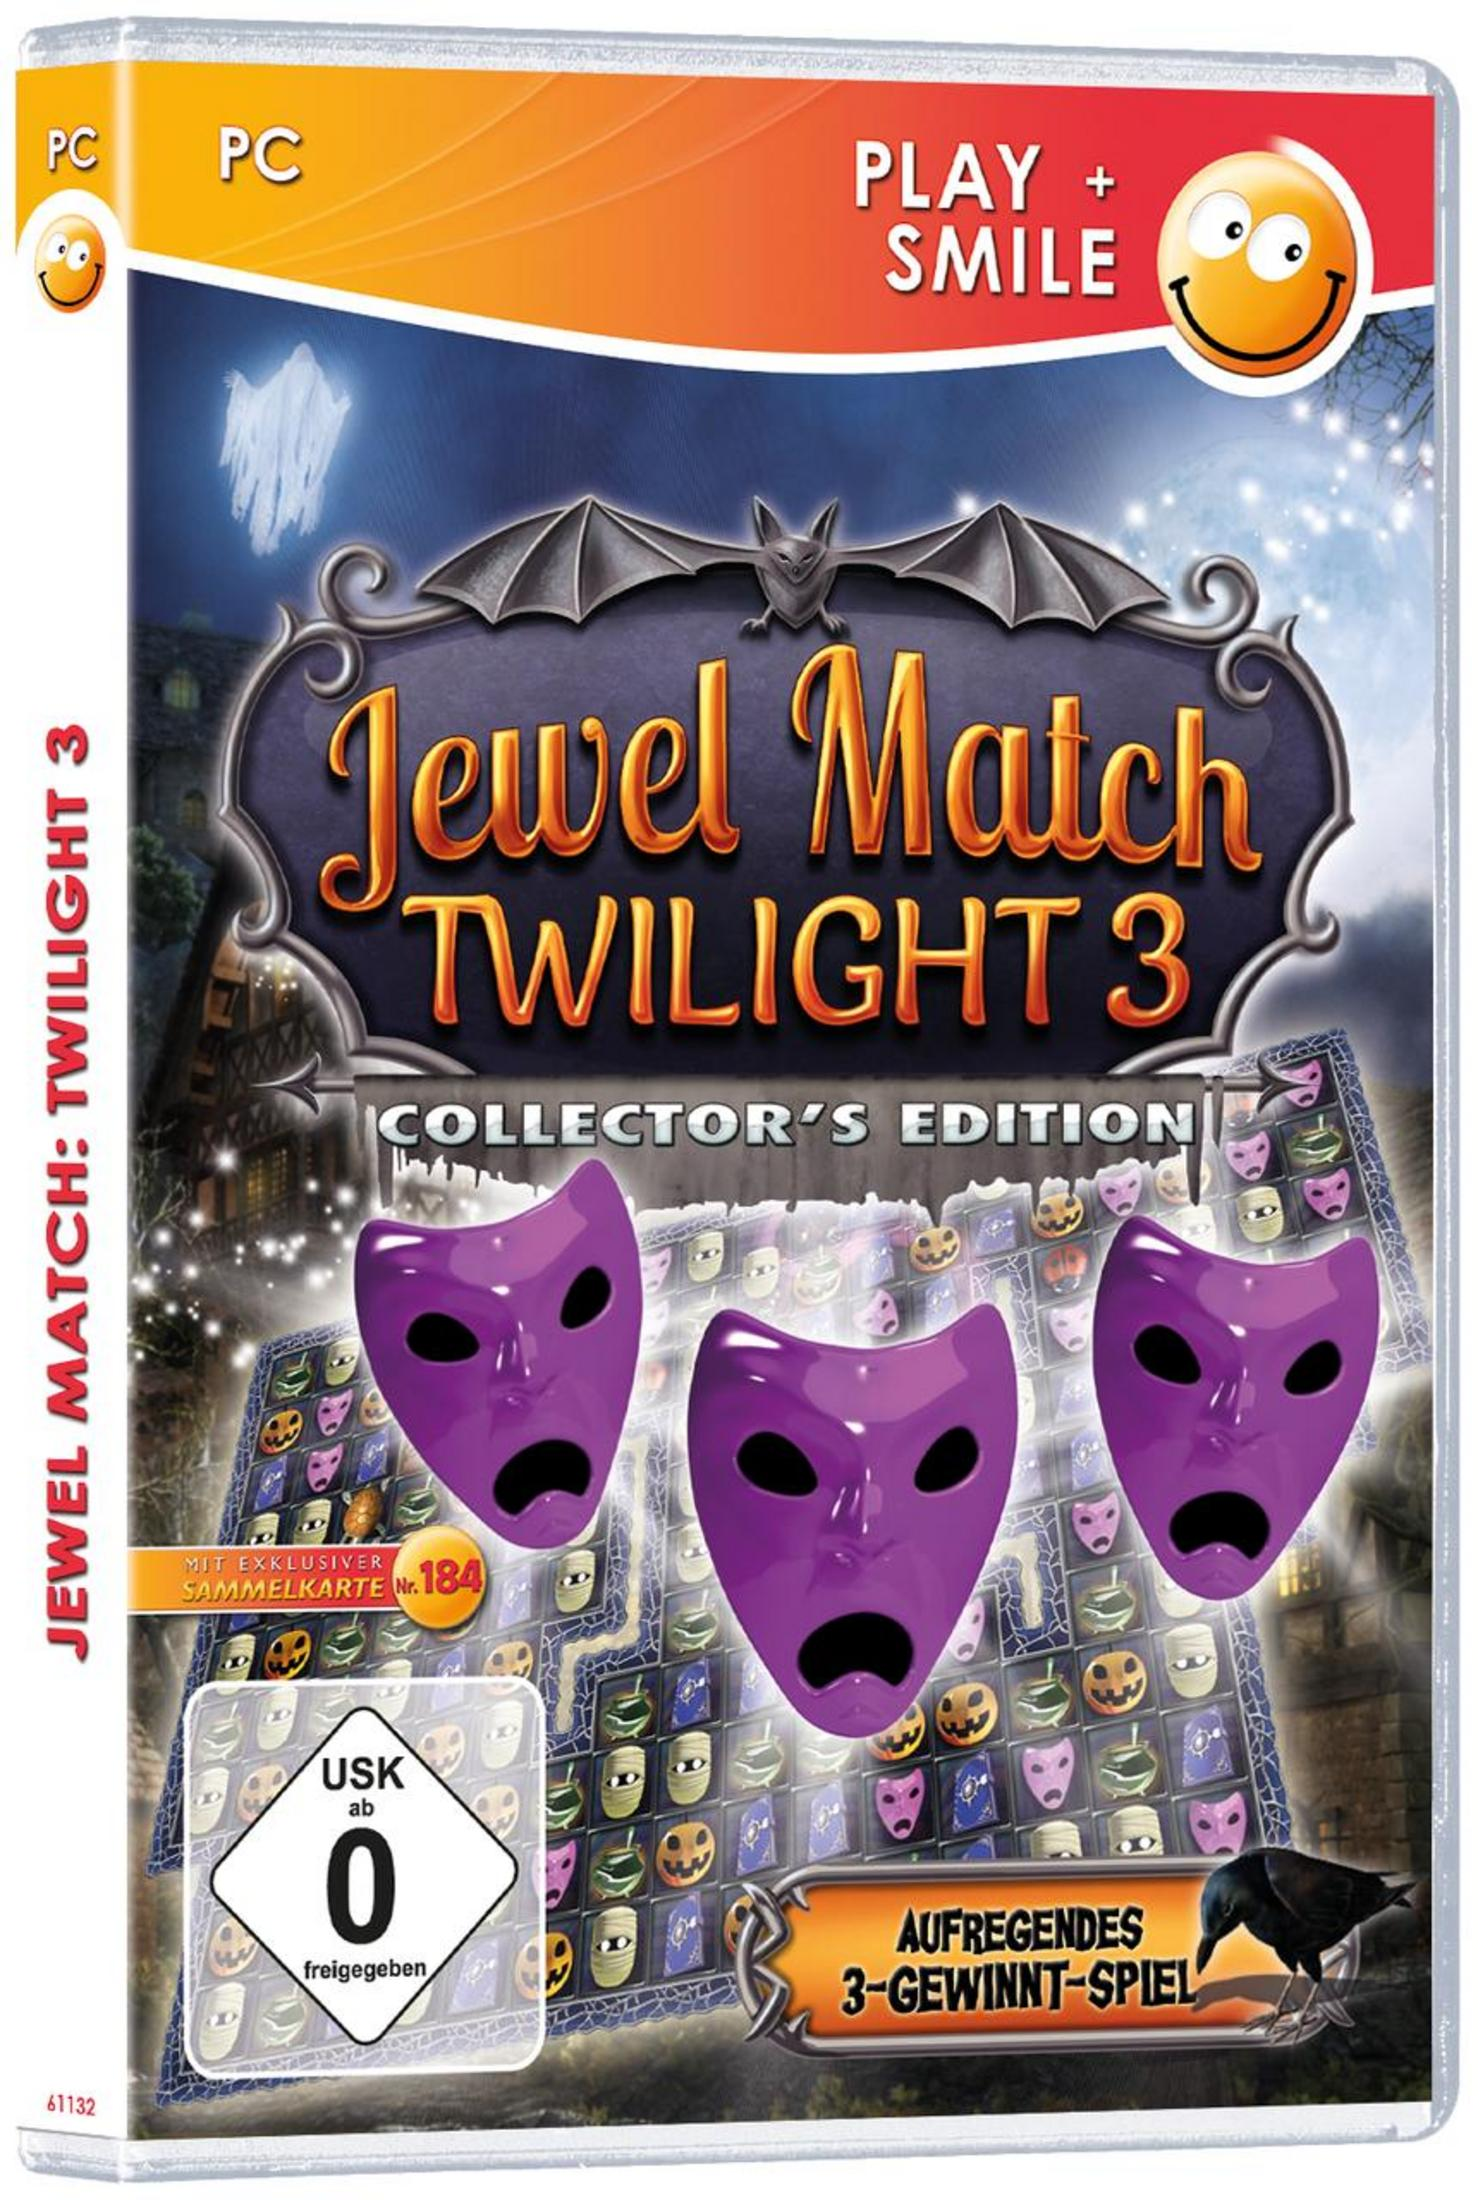 MATCH-TWILIGHT 3 EDITION) [PC] - (COLLECTOR S JEWEL